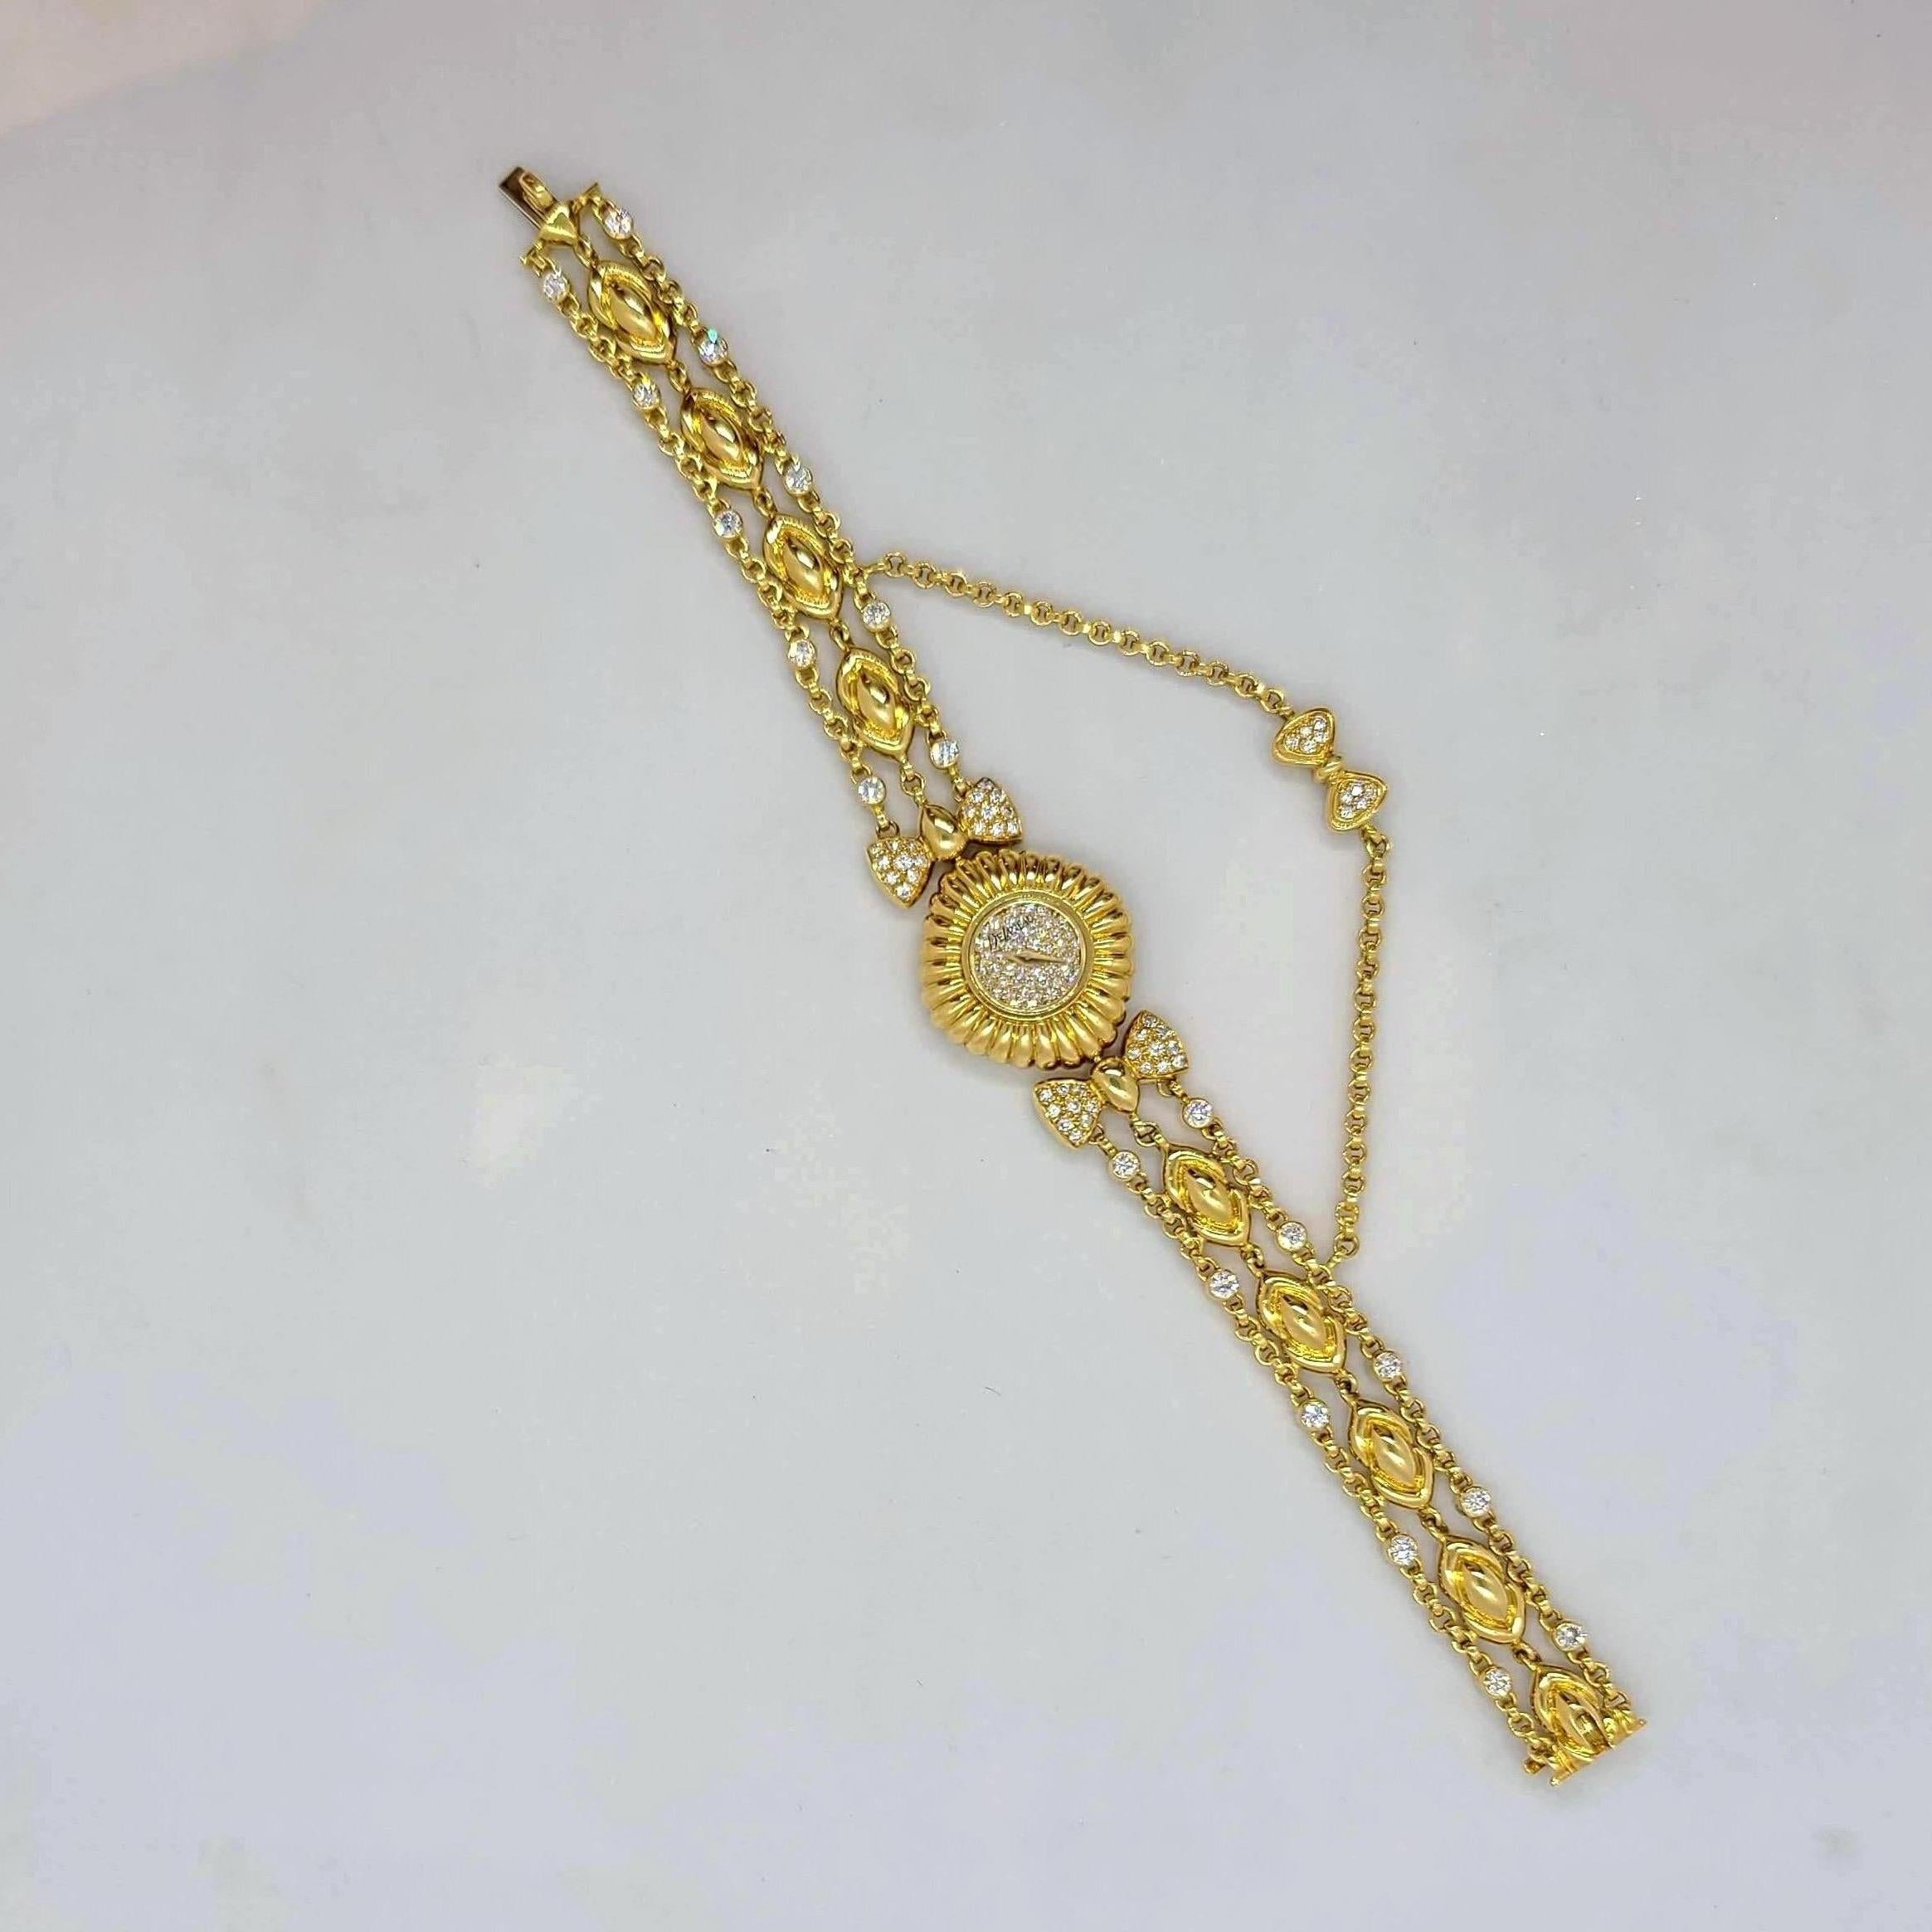 DeLaneau 18 Karat Yellow Gold and Diamond Watch with Diamond Bows 2